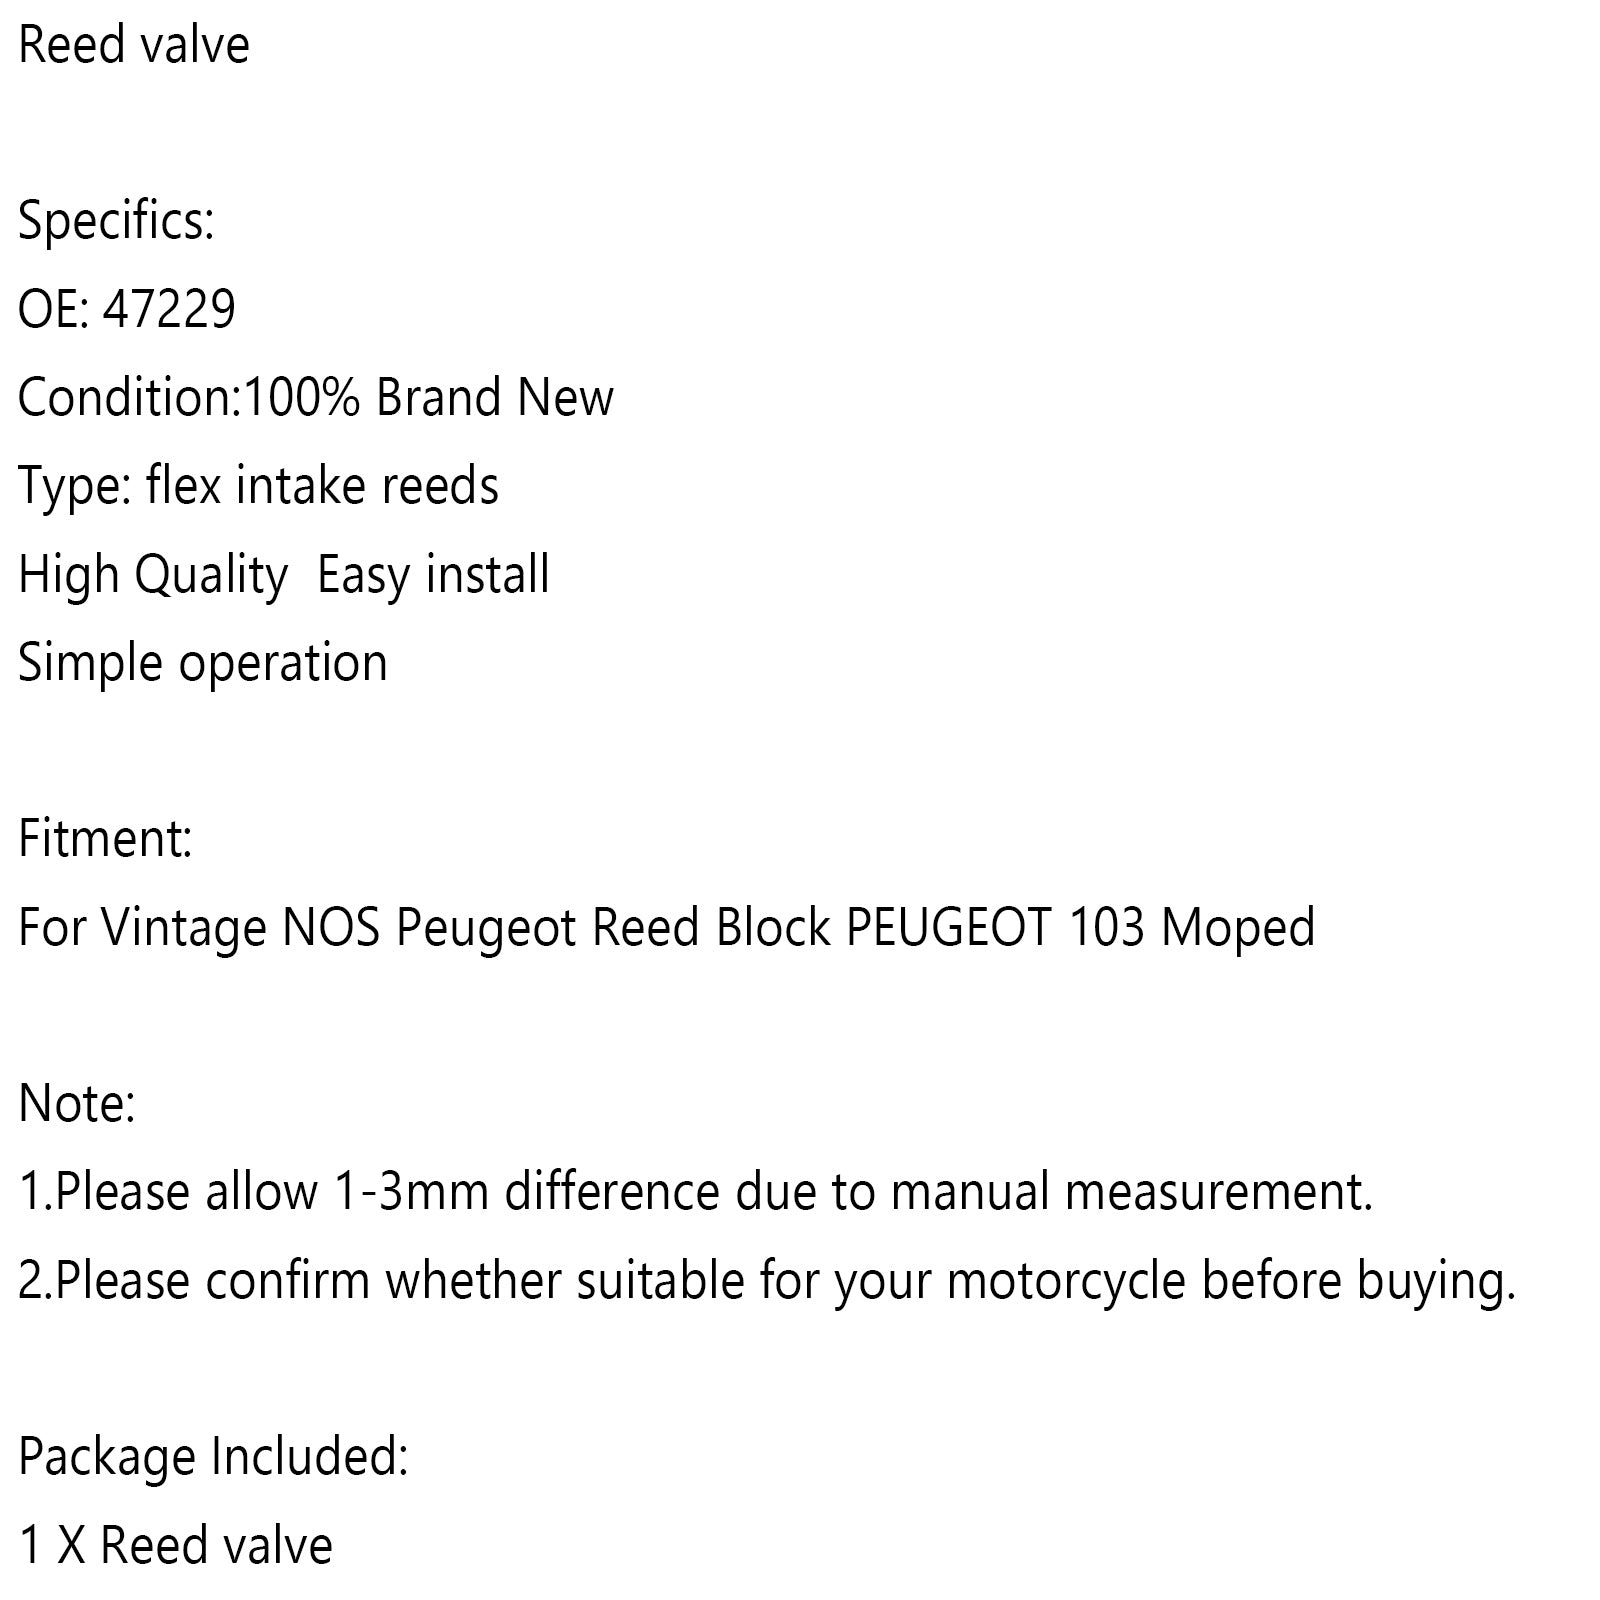 Vintage NOS Peugeot Reed Block Reed Valve  For PEUGEOT 103-SP MOPED 47229 Generic